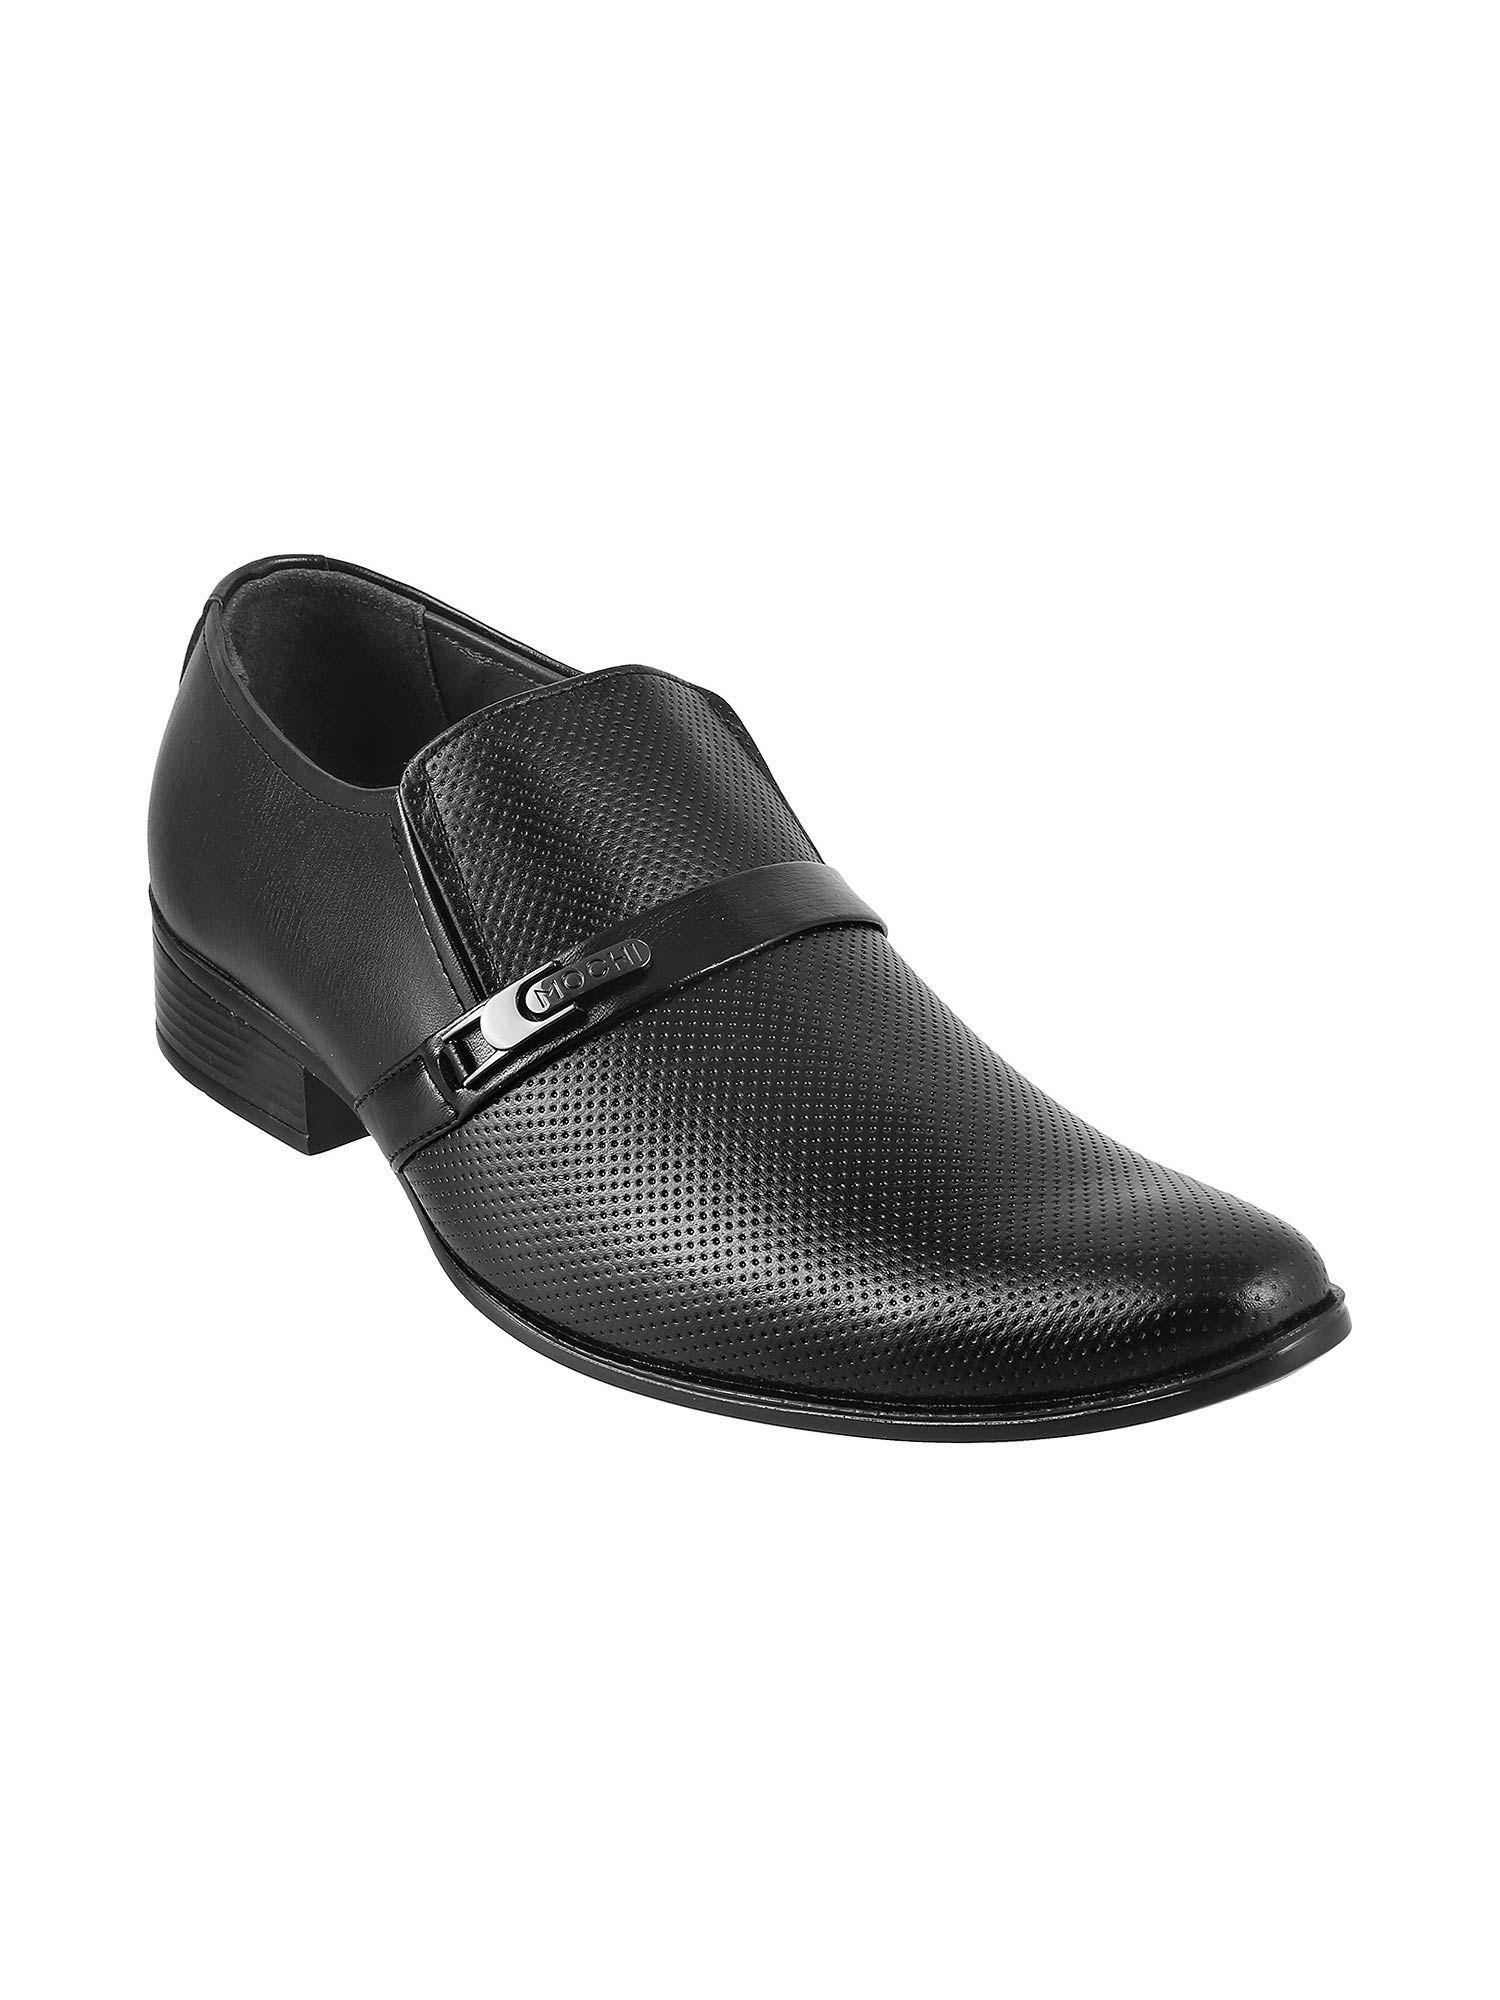 solid black slip-on shoes